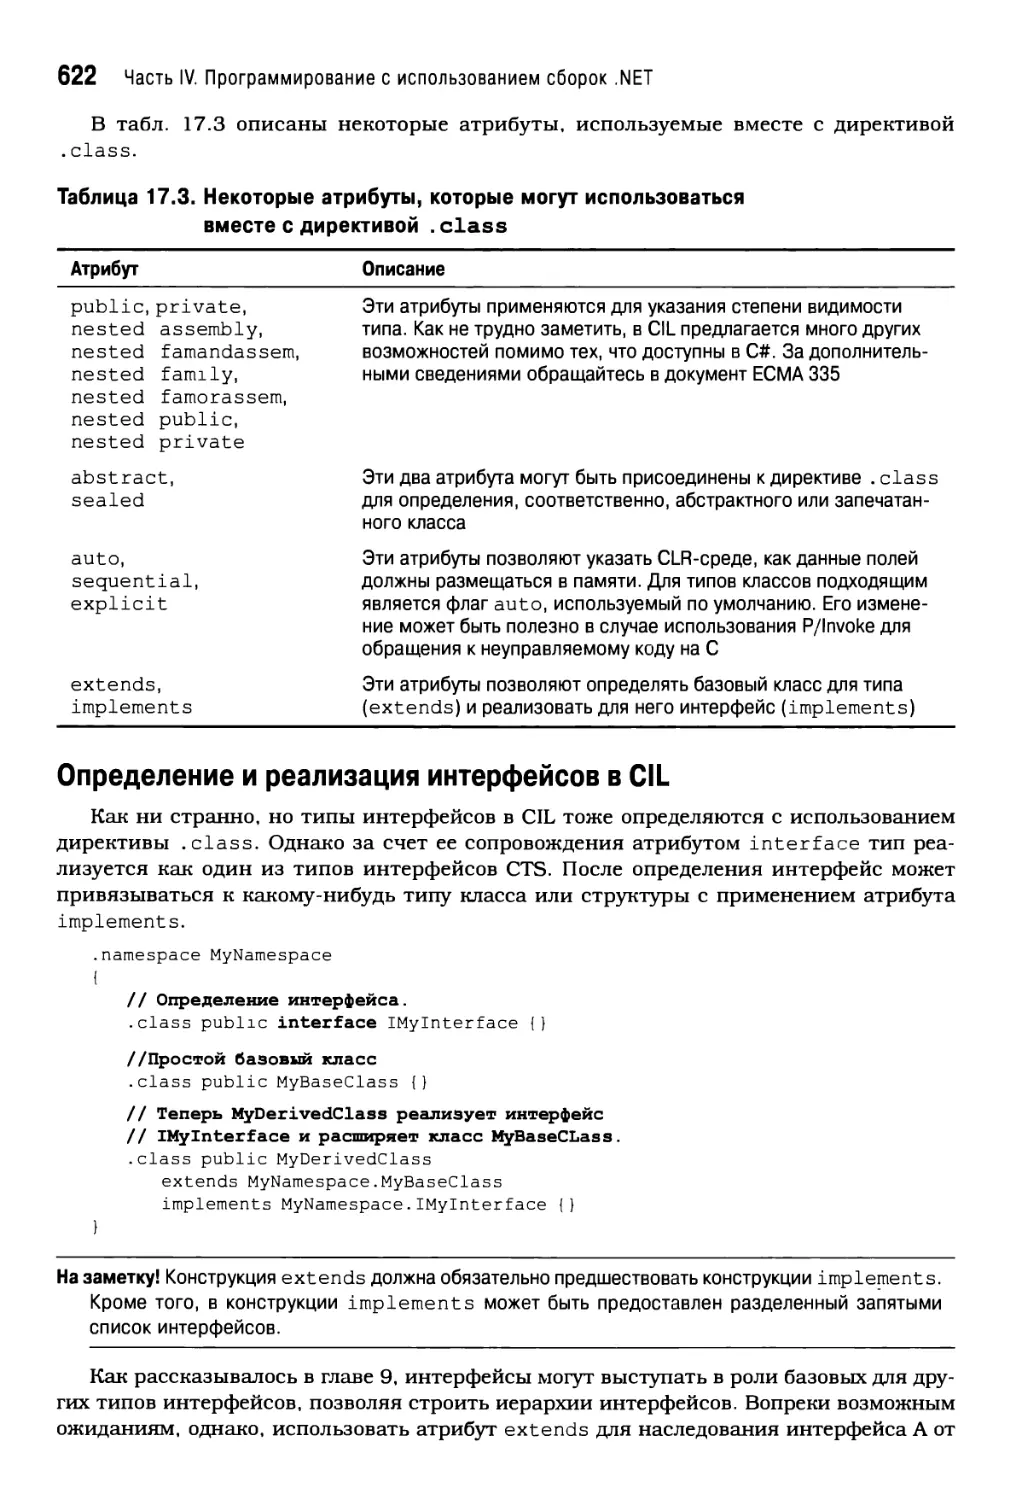 Определение и реализация интерфейсов в CIL